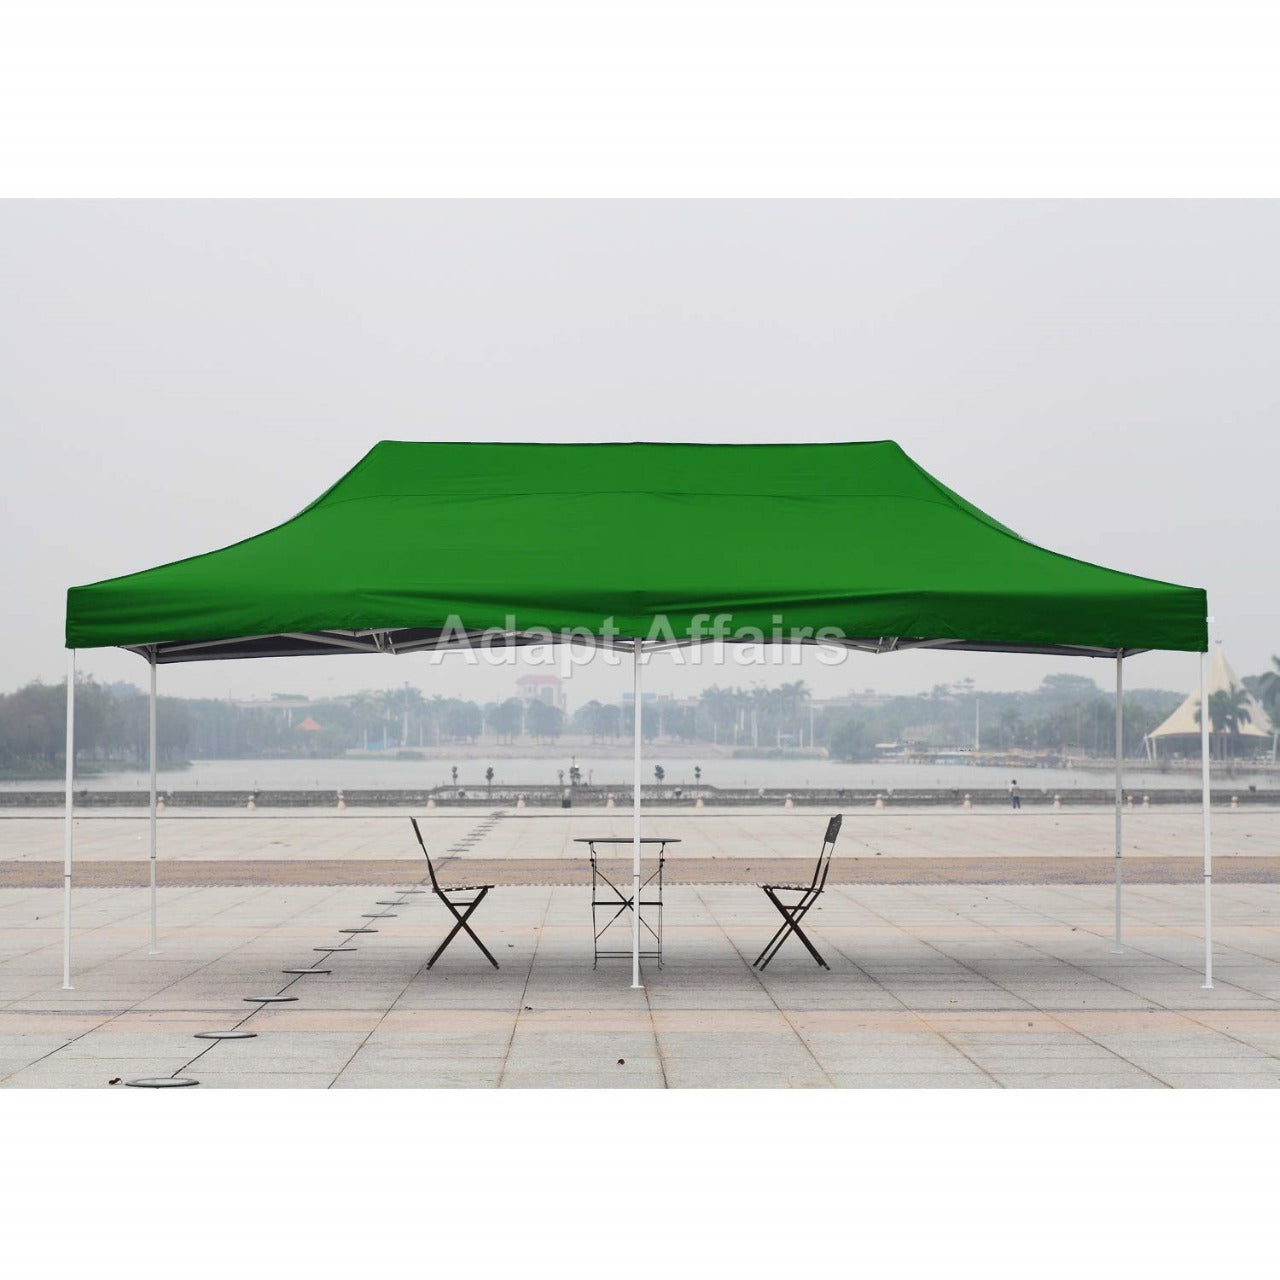 Canopy Tent 10 x 20 Feet - Extra Premium Quality